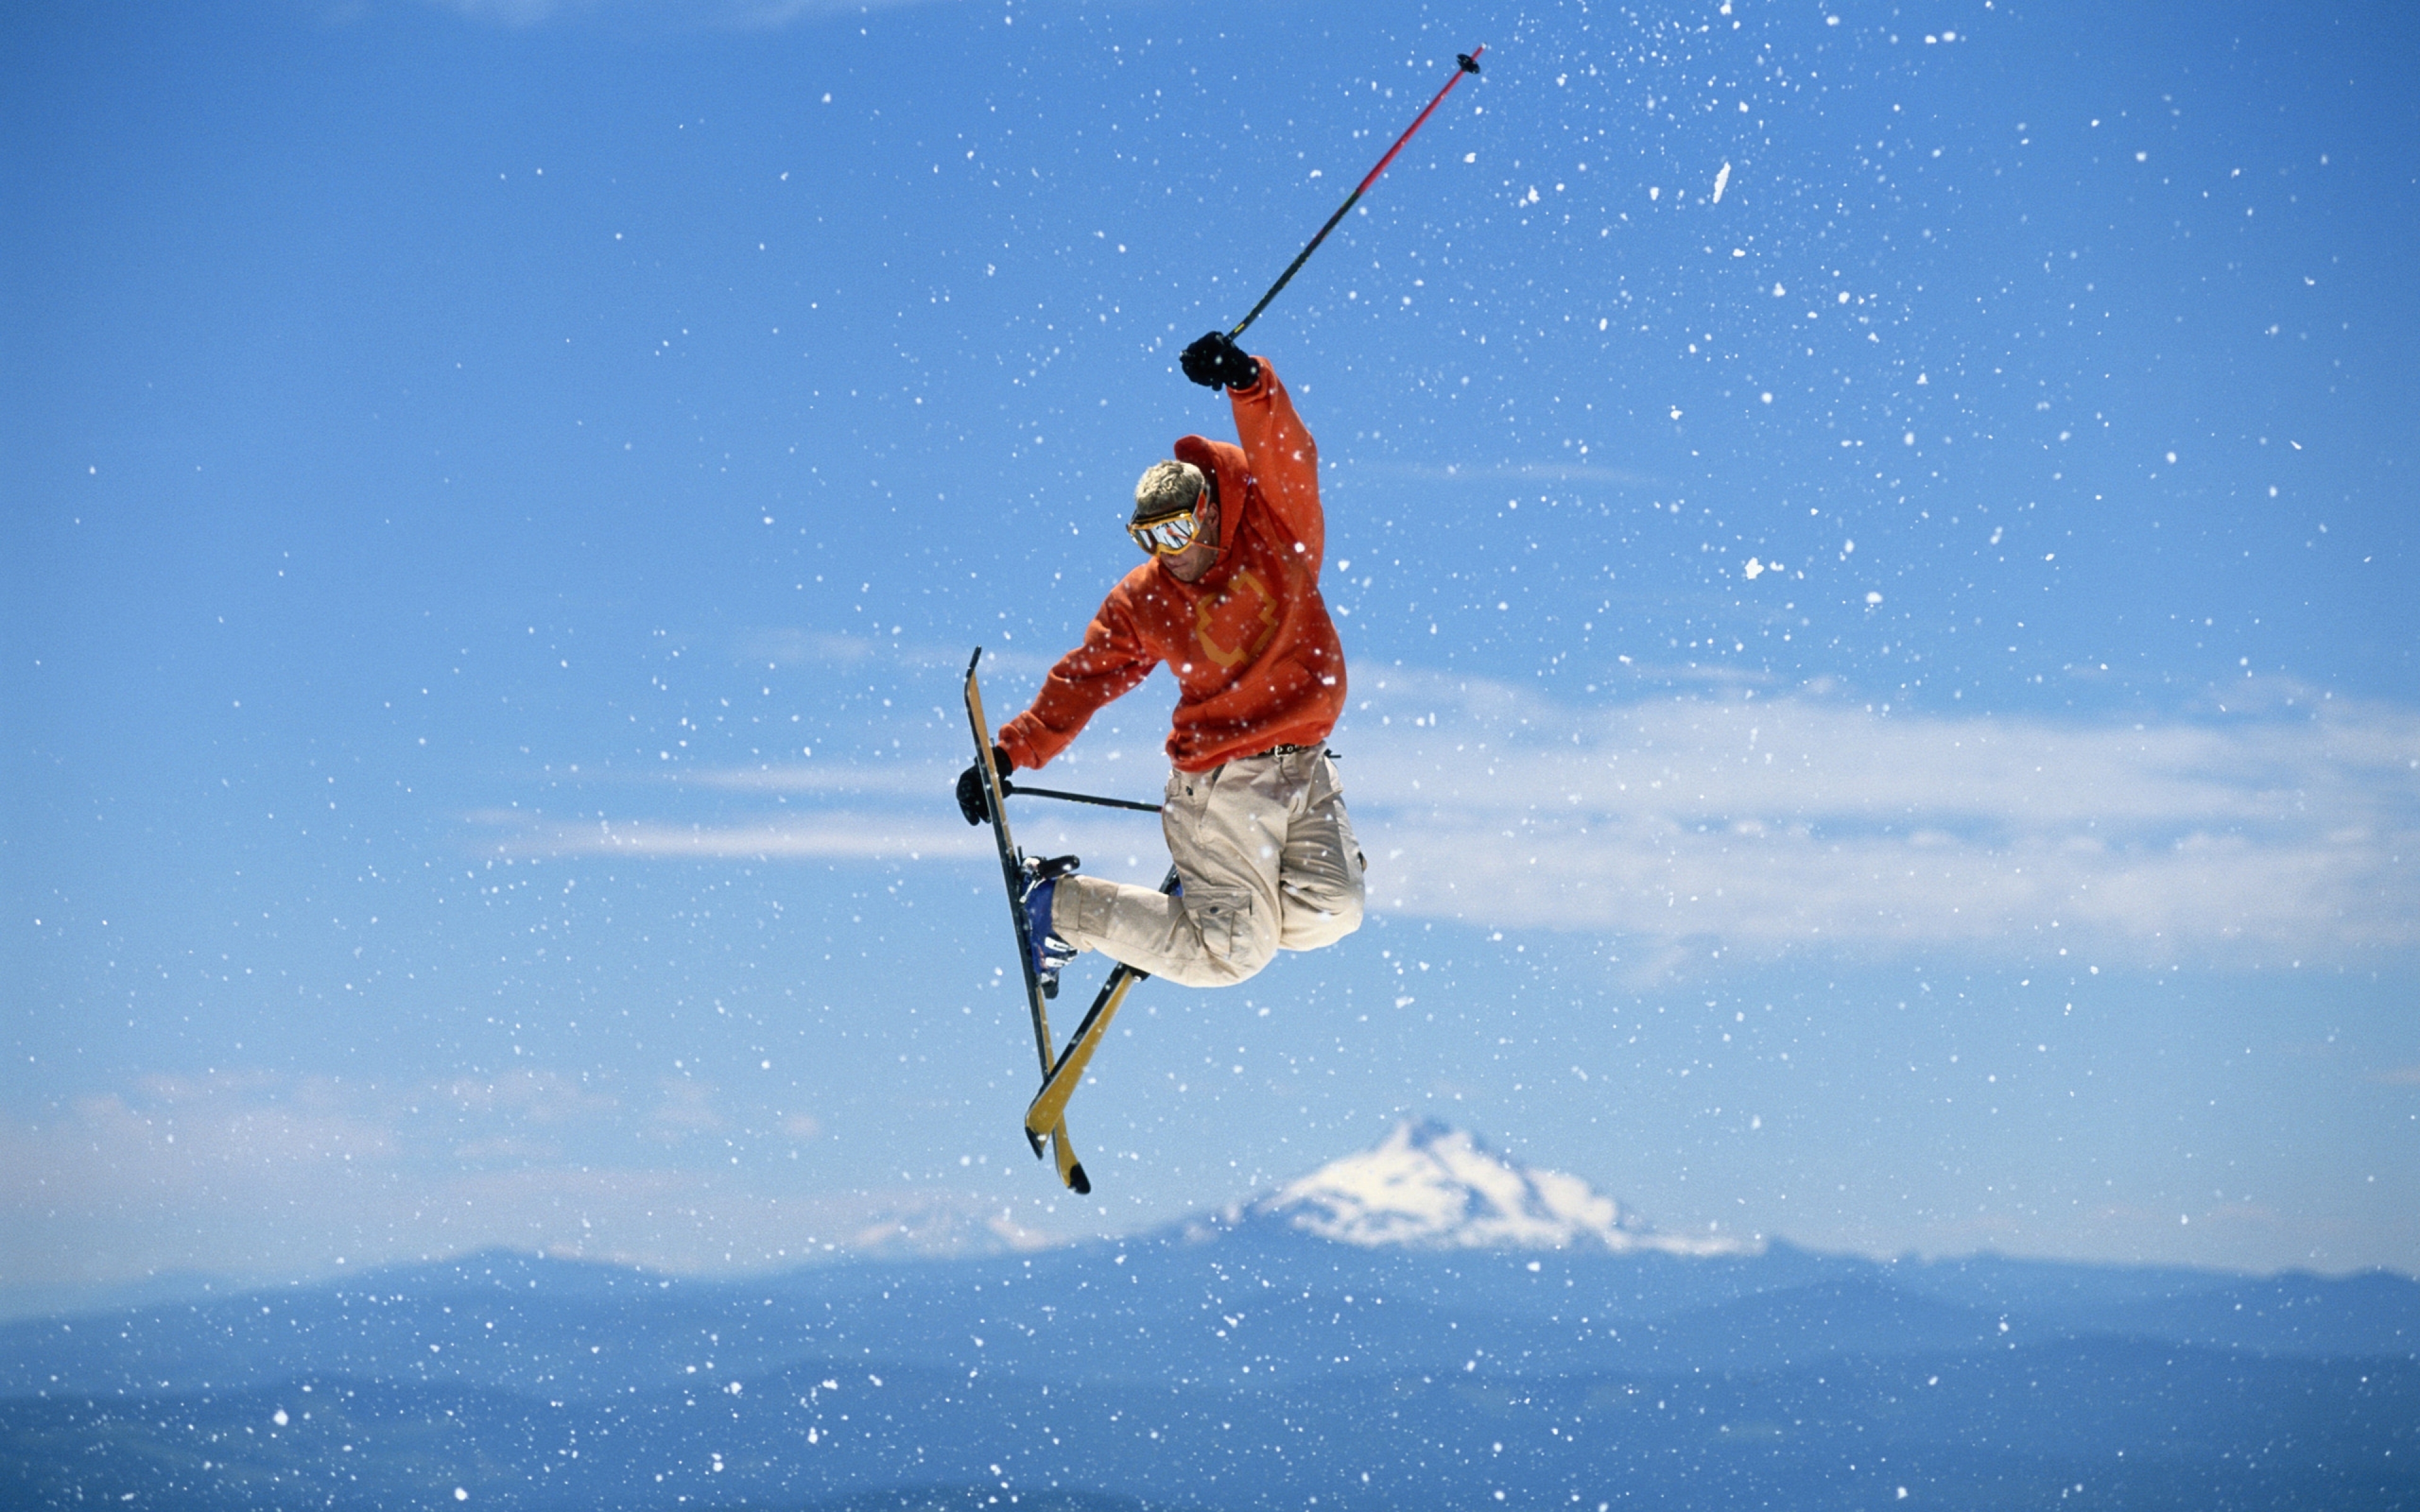 Skiing ski out